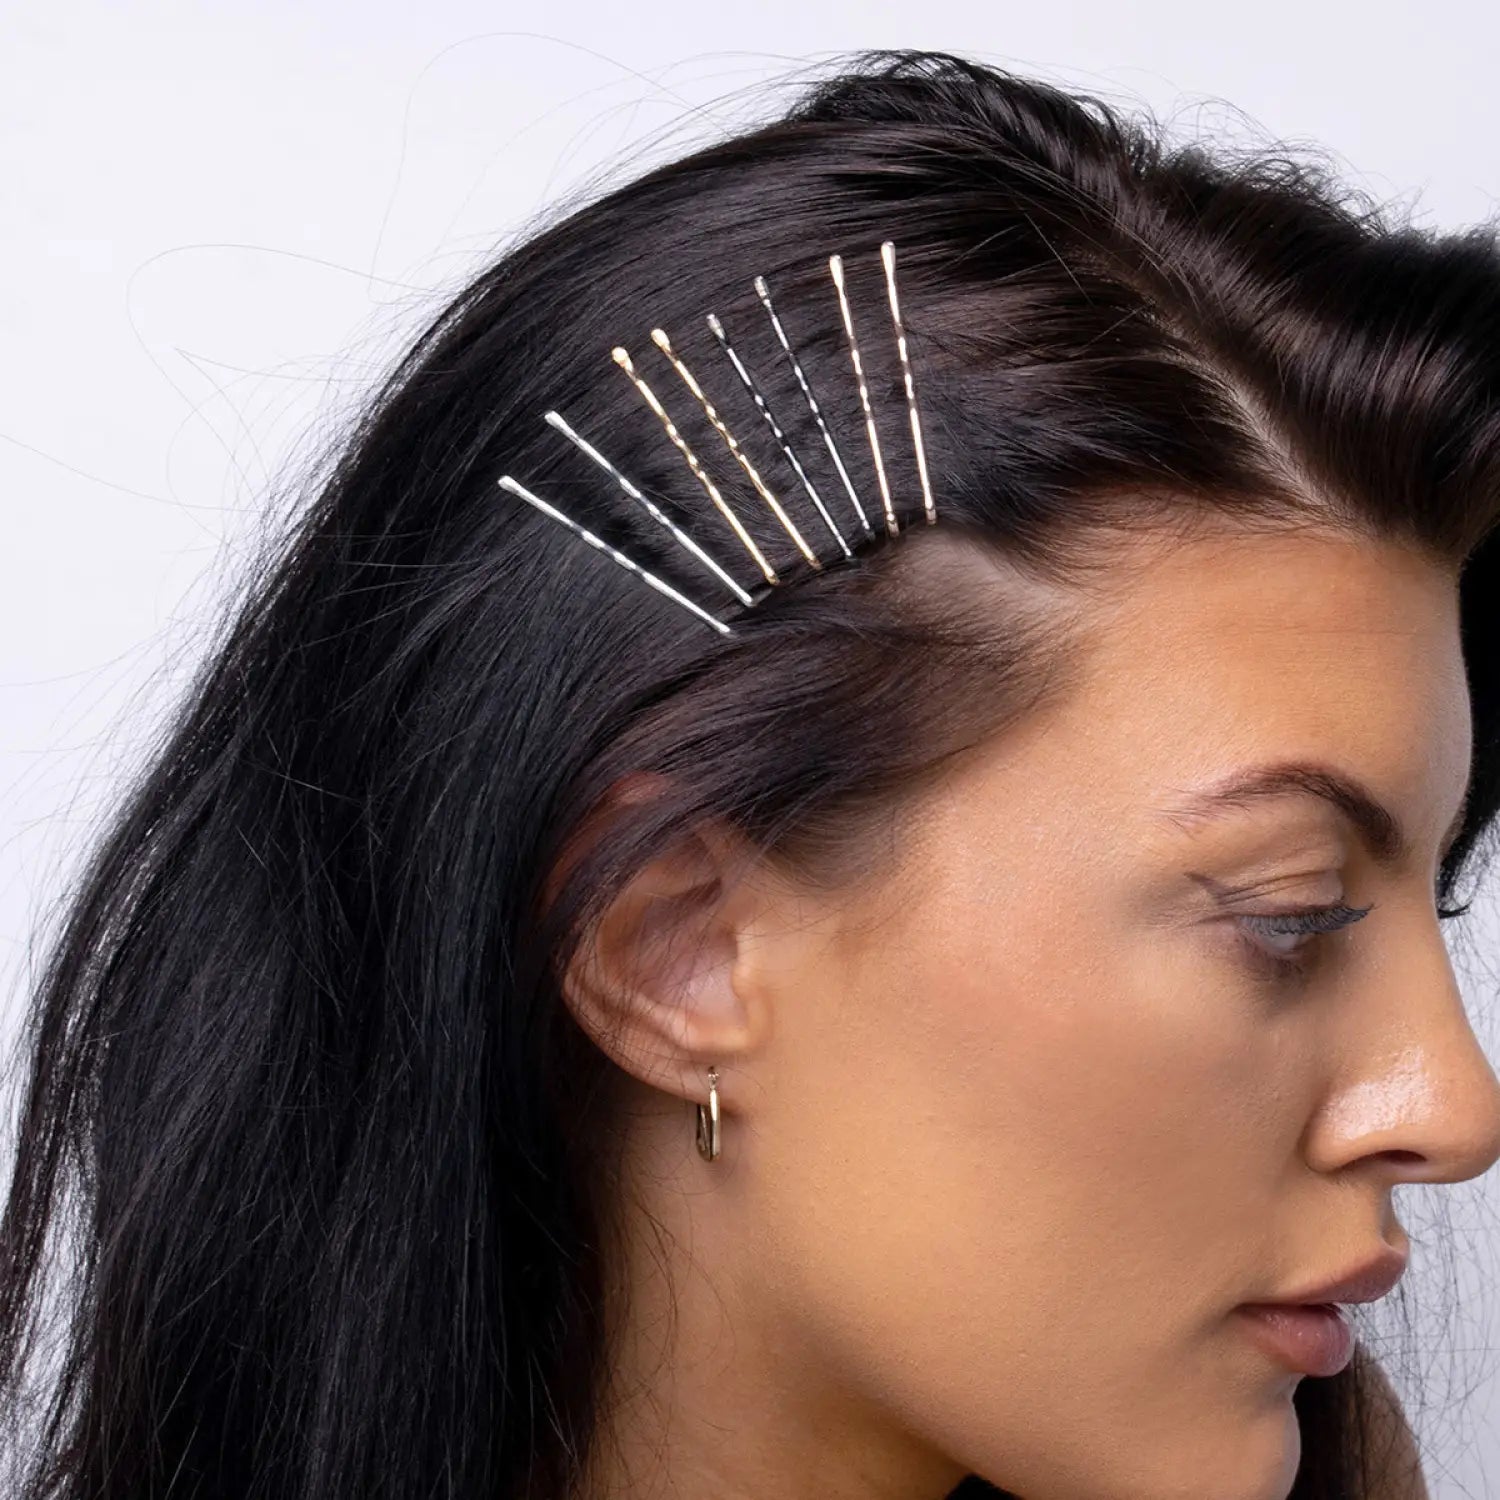 Sturdy metal wavy bobby pins grip on woman’s hair